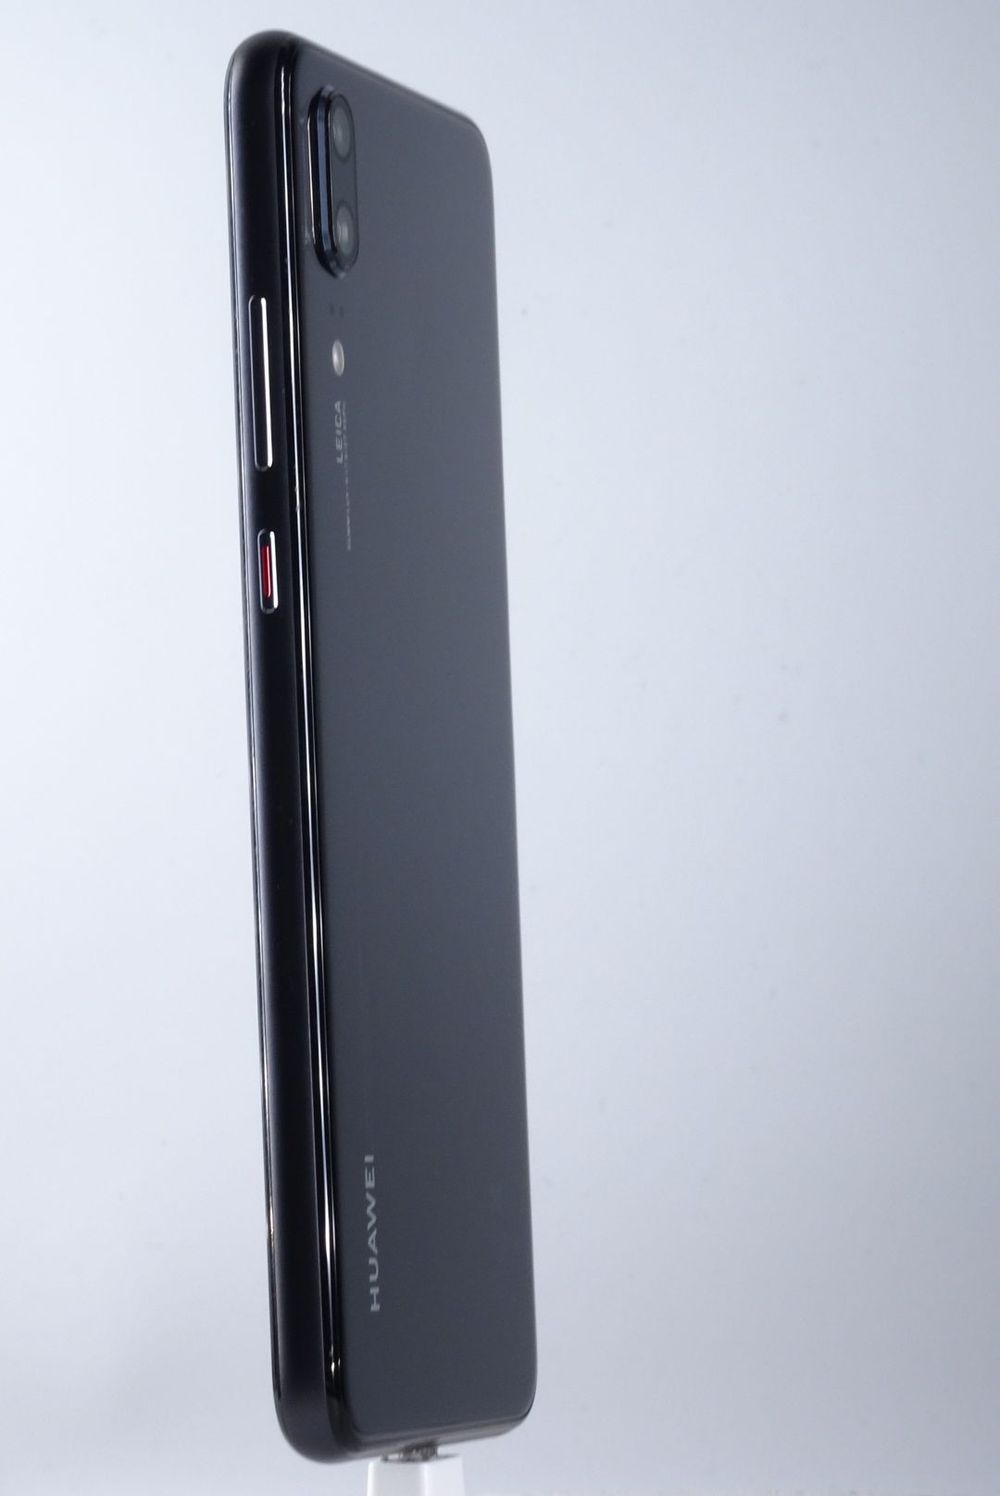 Telefon mobil Huawei P20 Dual Sim, Black, 64 GB,  Ca Nou